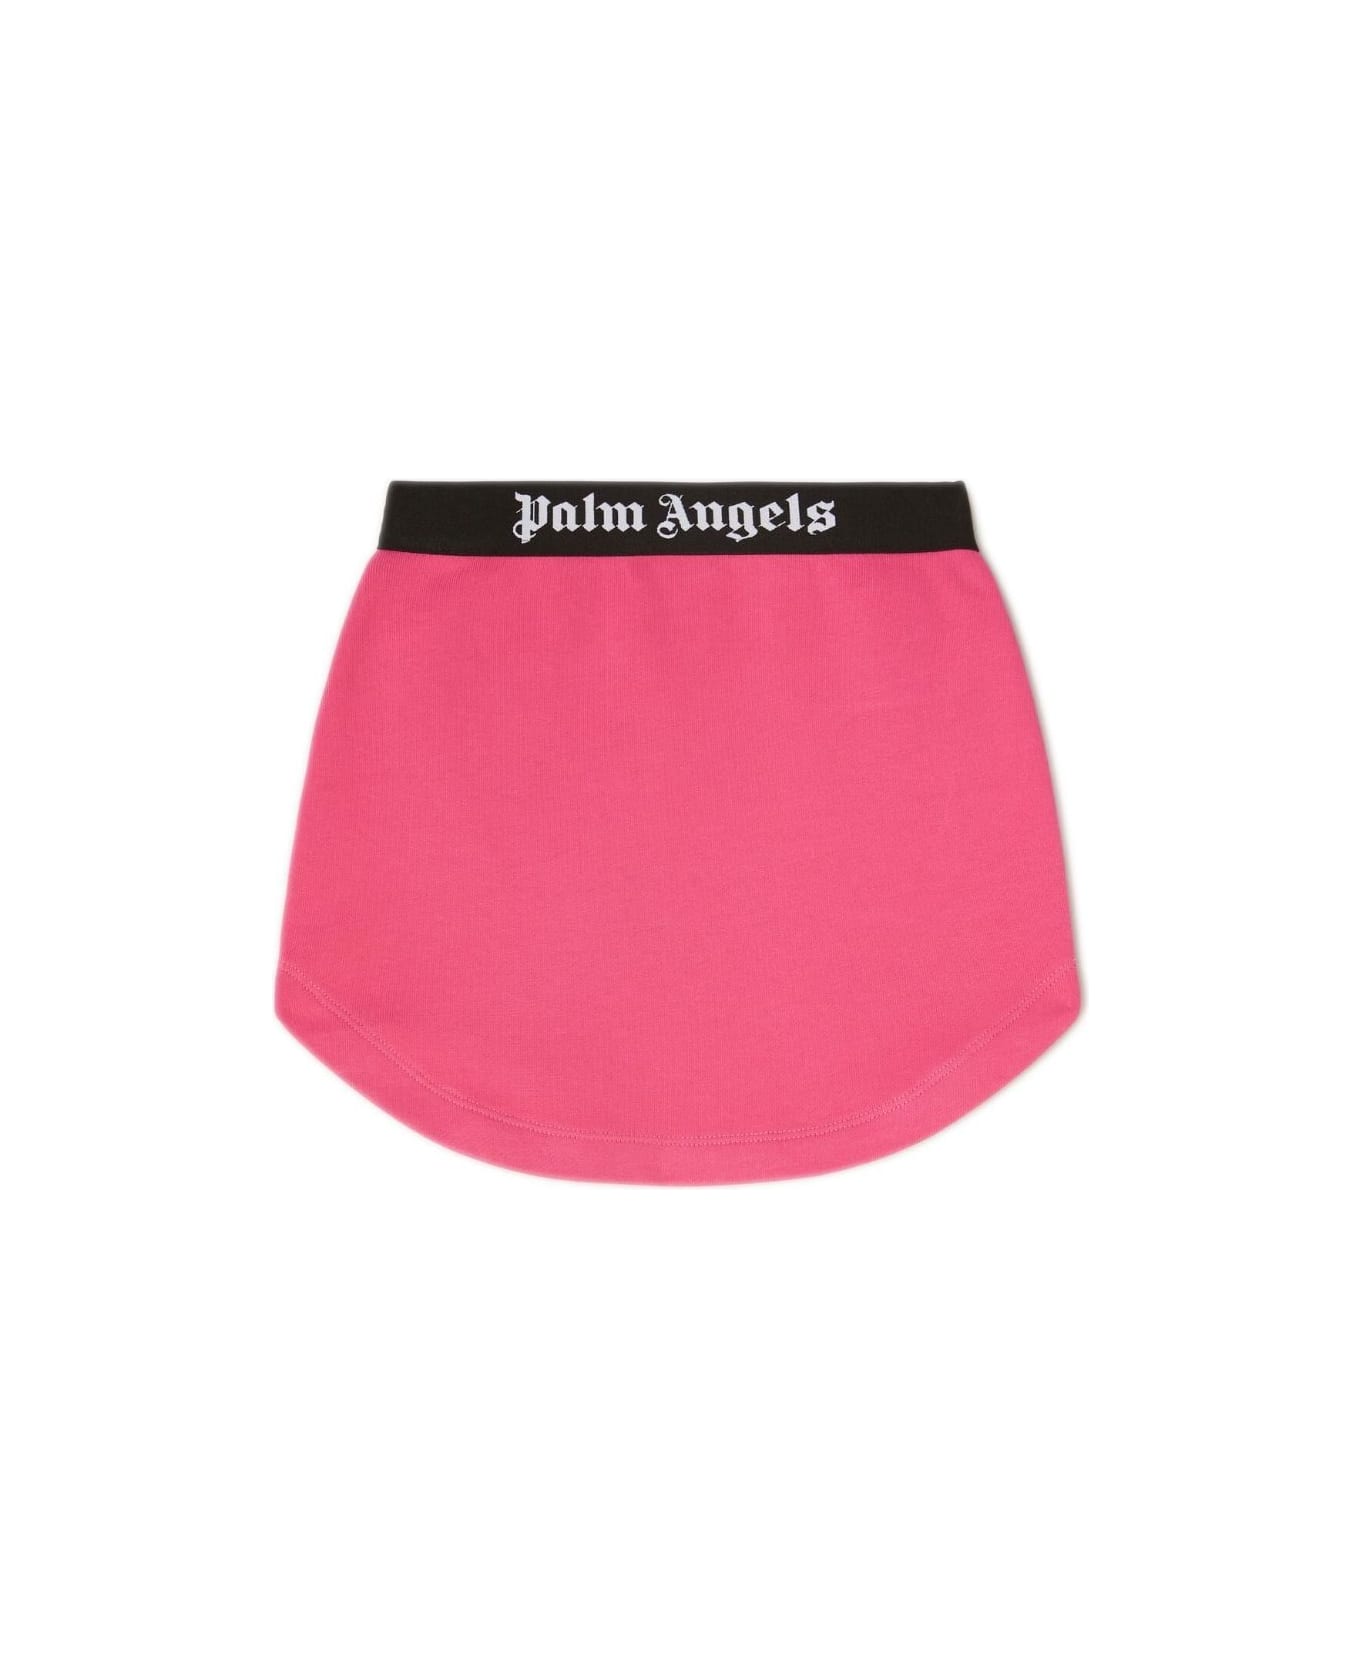 Palm Angels Fuchsia Mini Skirt With Black Logo Band - Pink